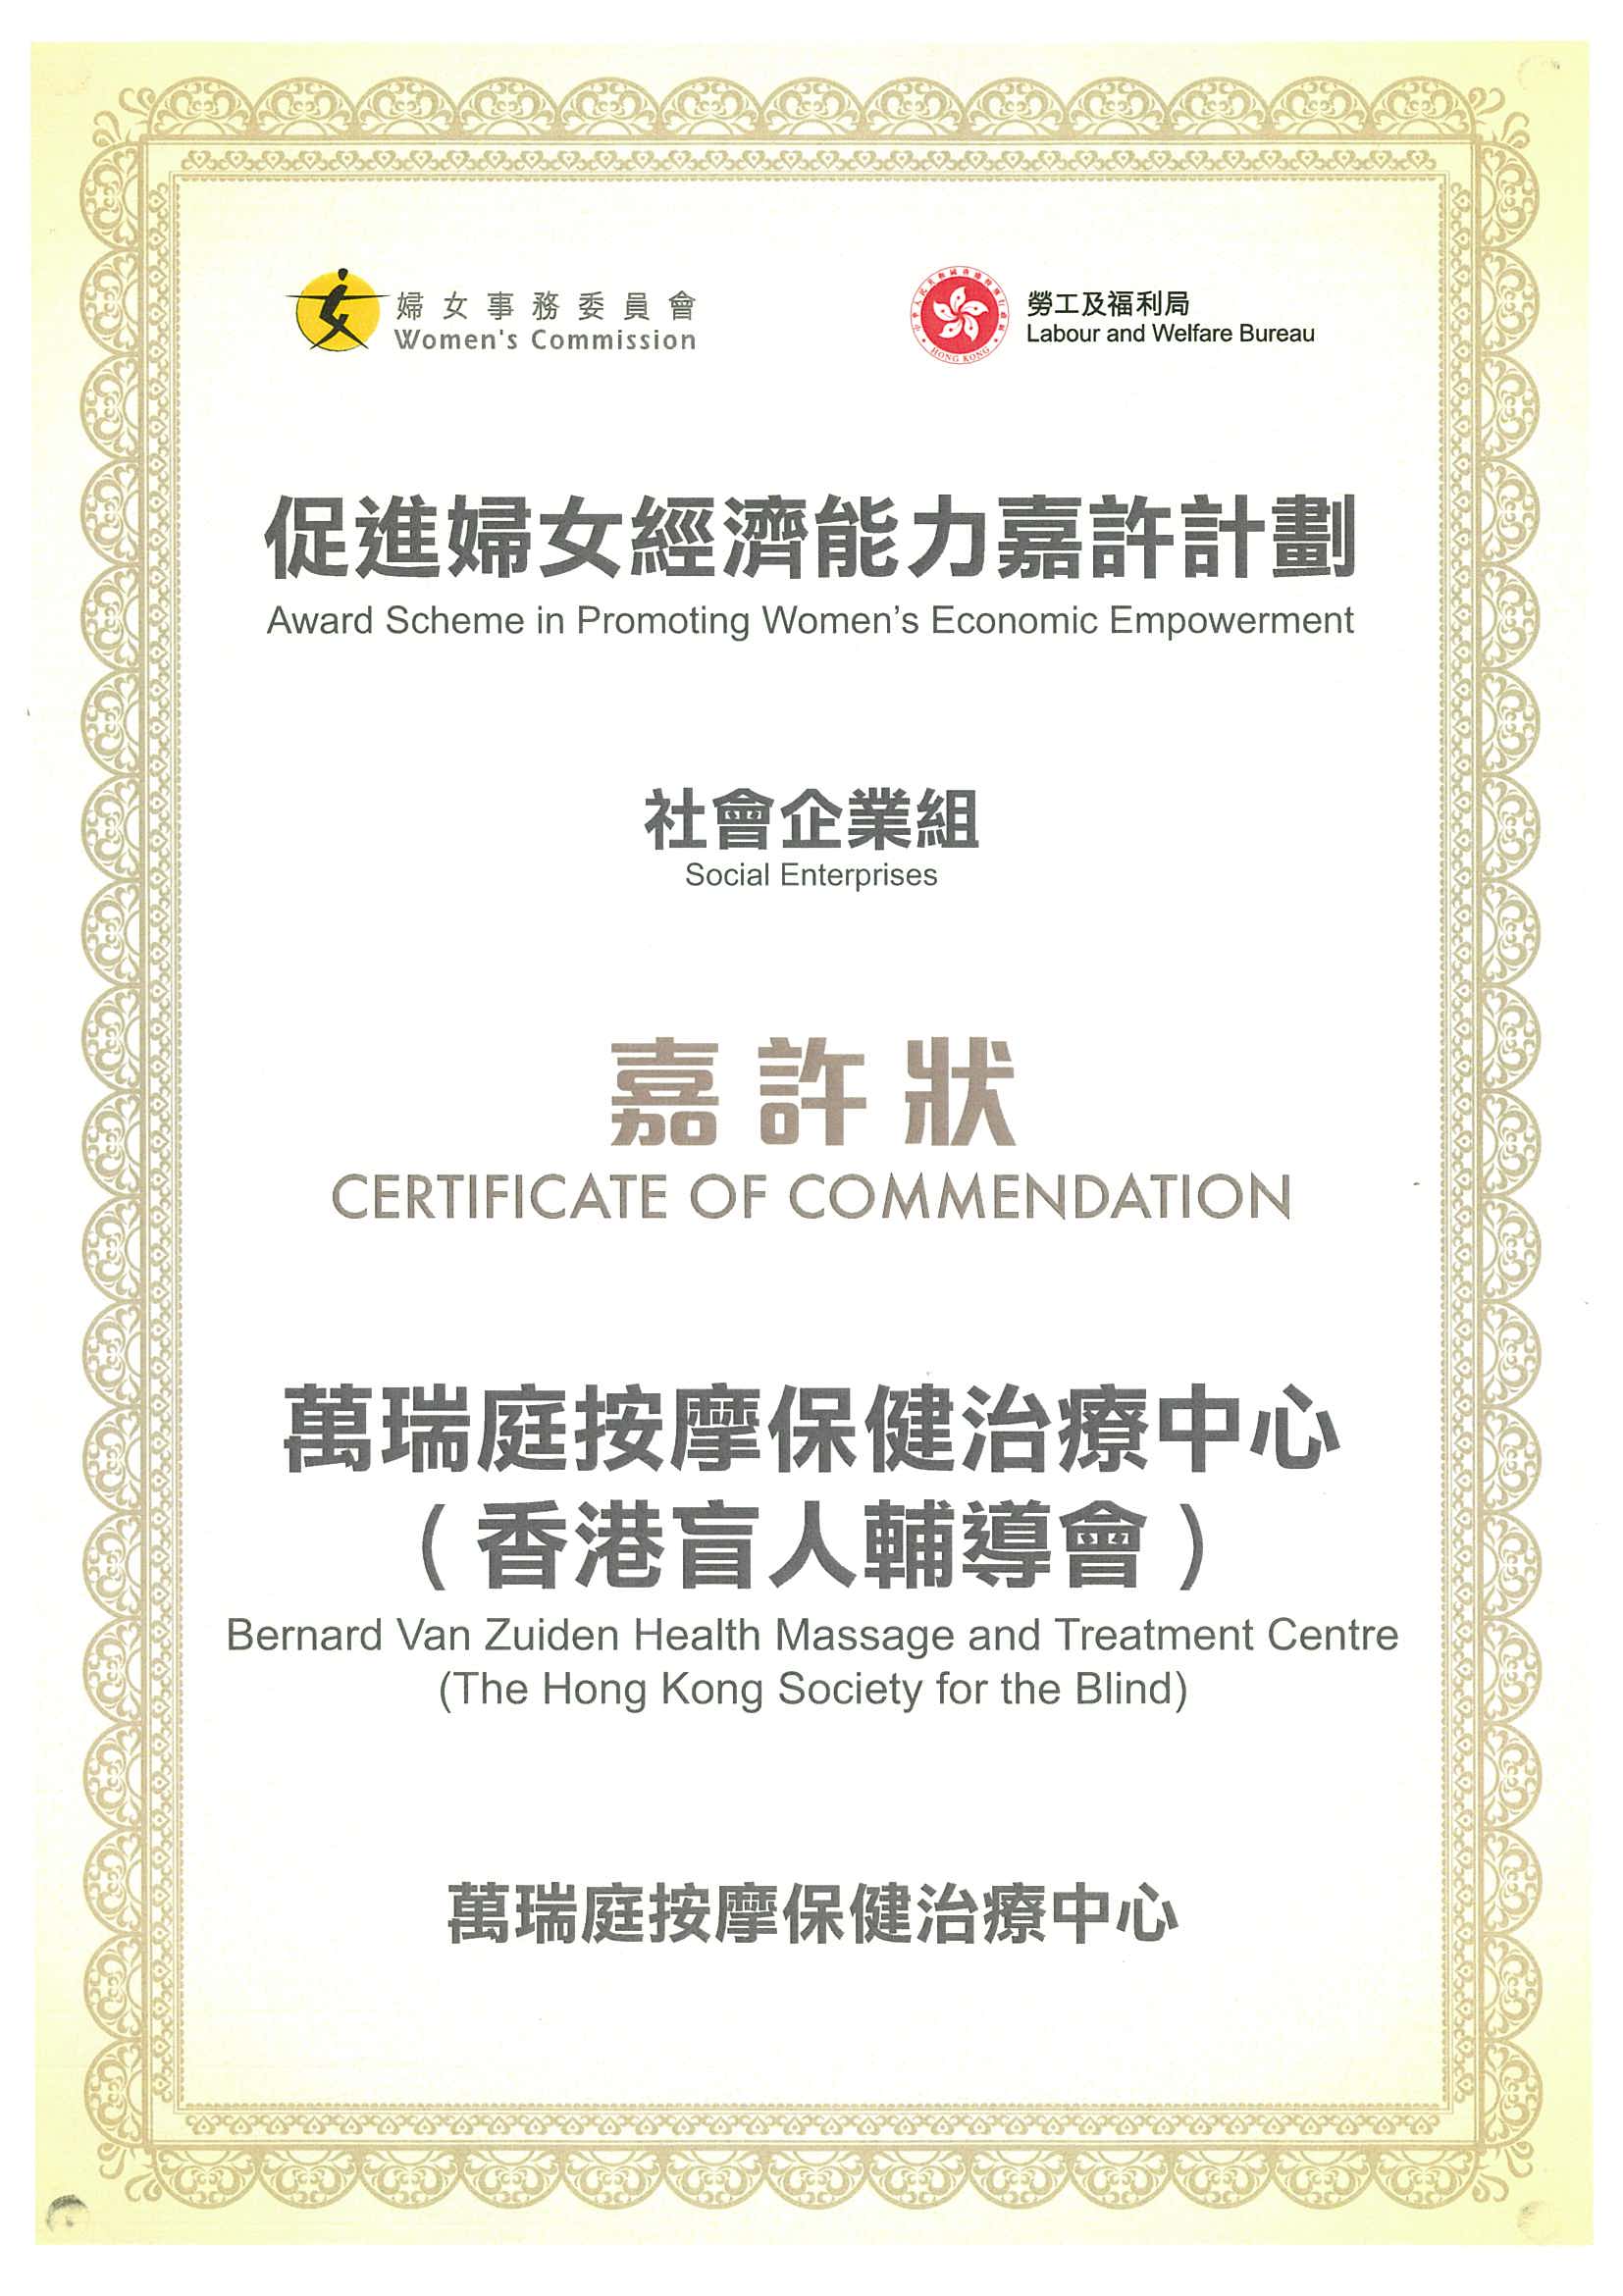 Award Scheme in Promotion Women's Economic Empowerment (Social Enterprises)